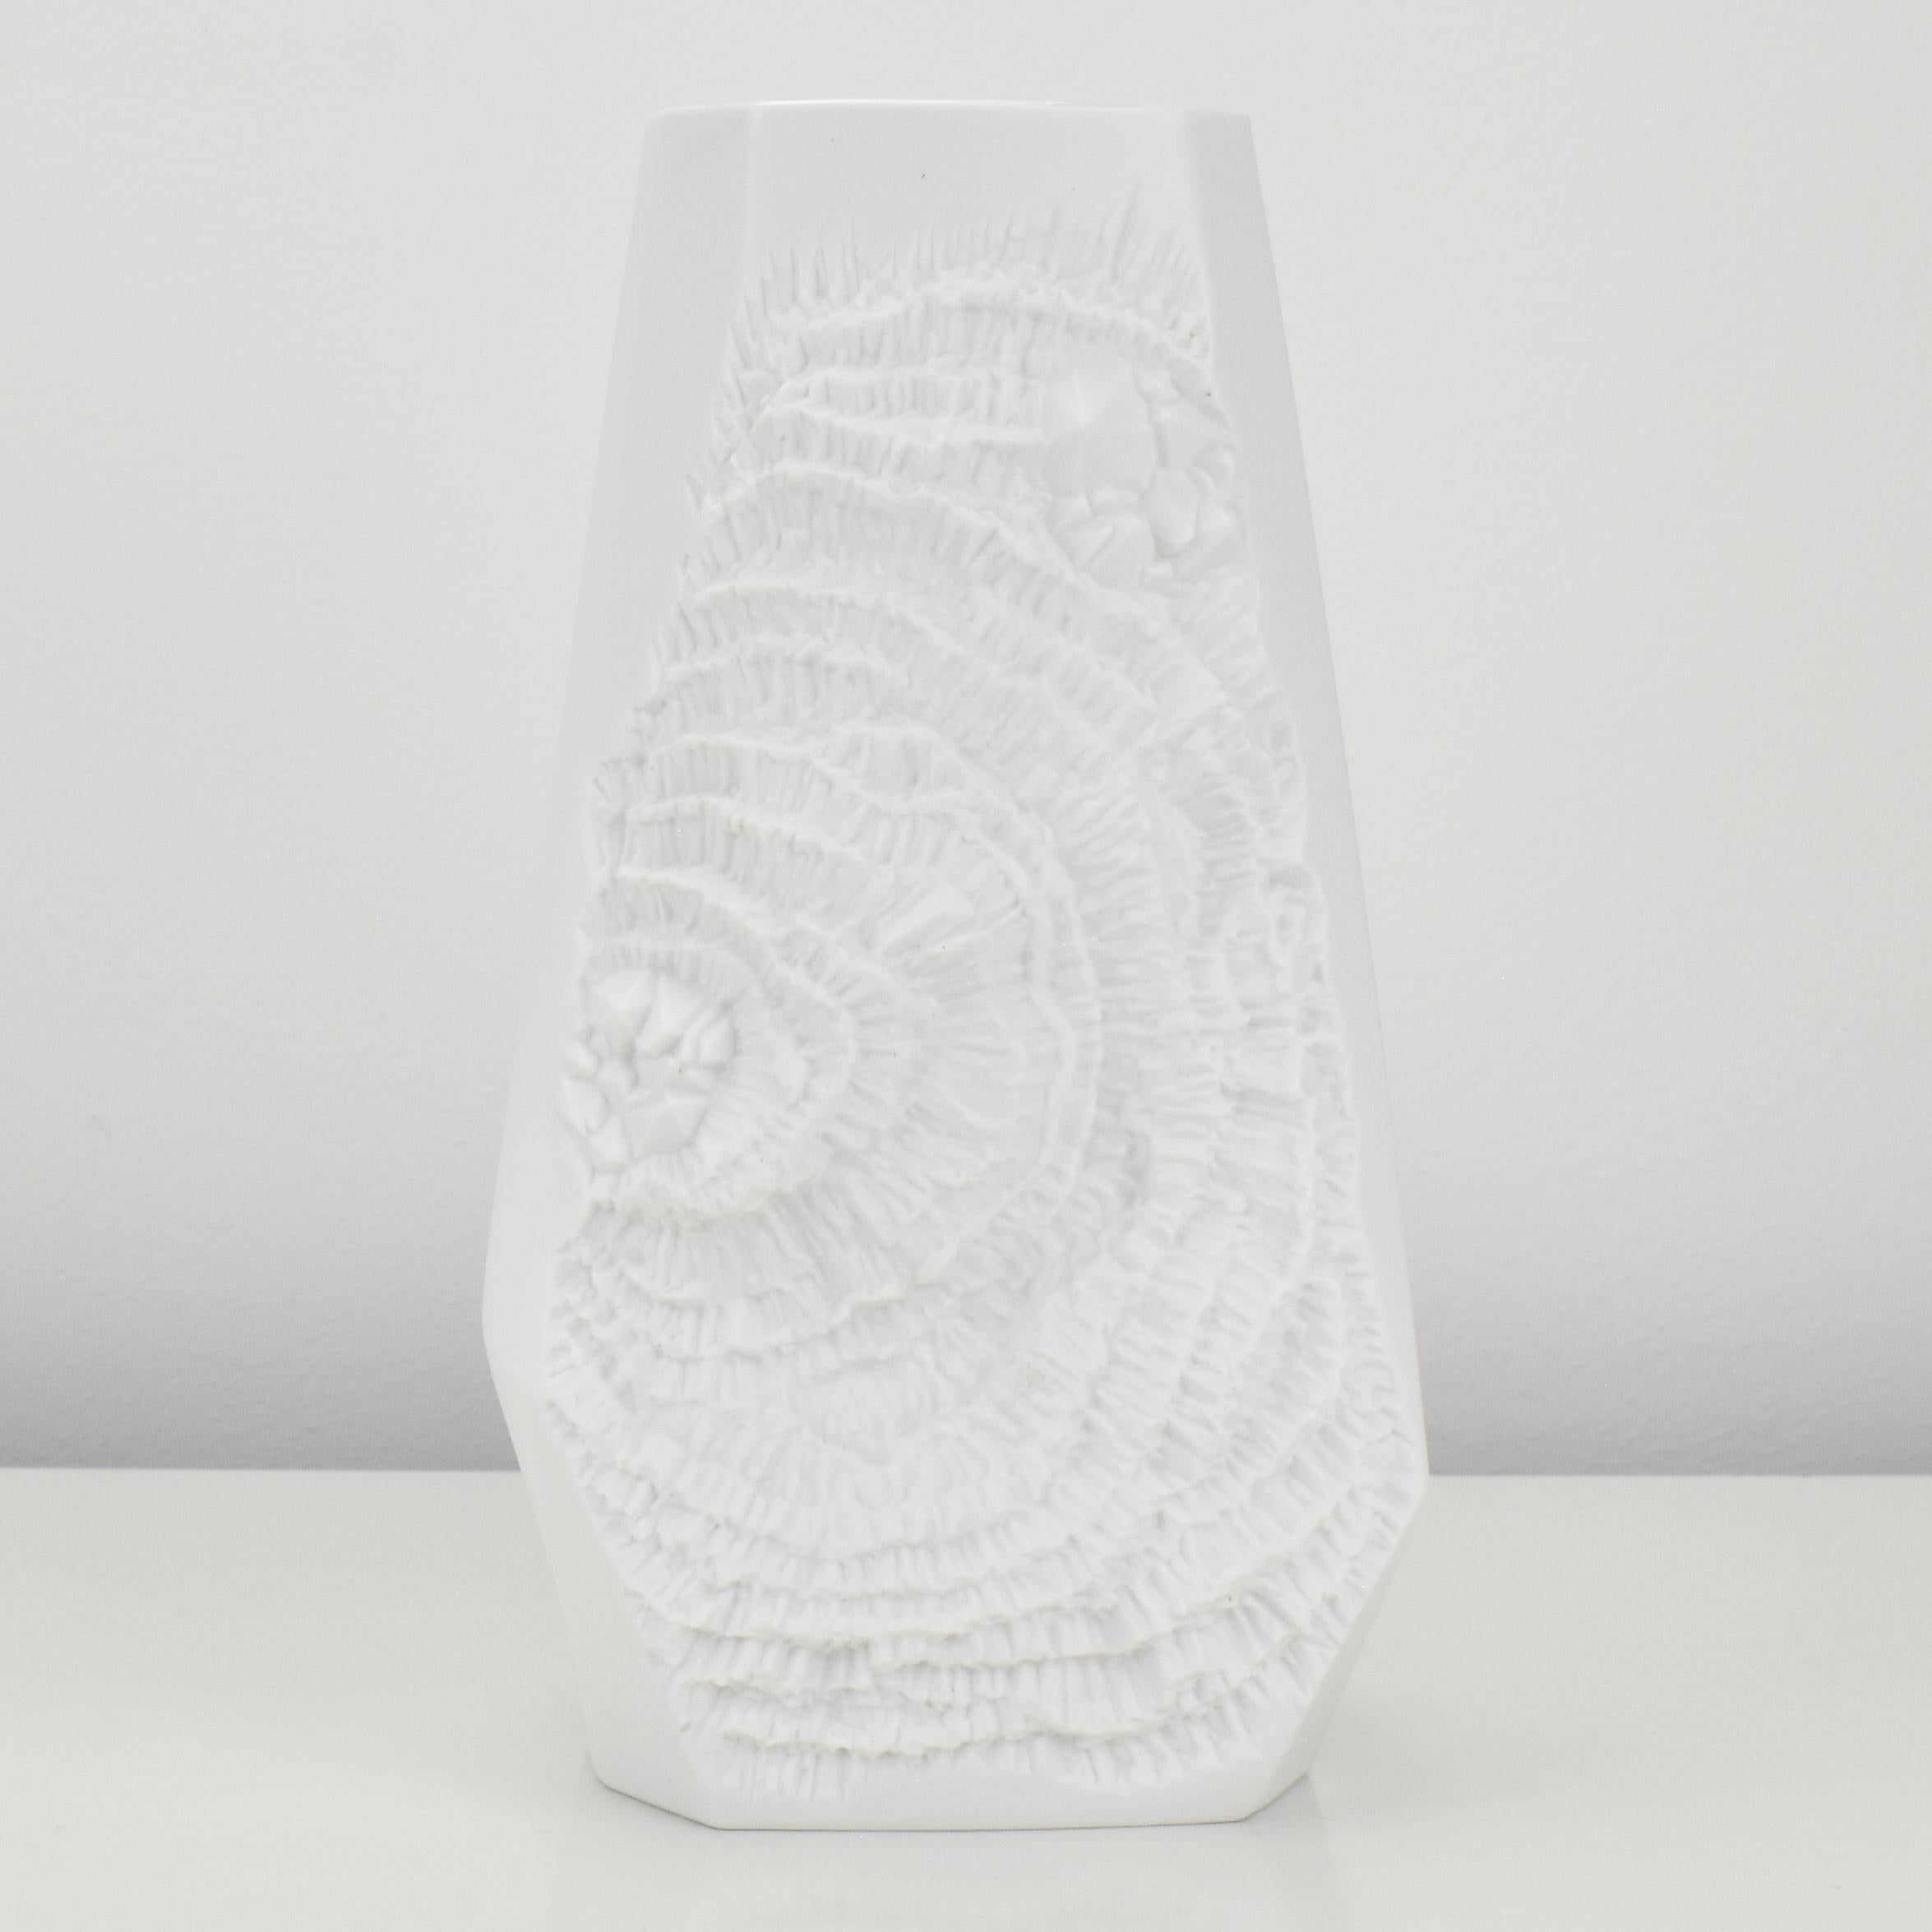 AK Kaiser Op Art White Bisque Porcelain Vase Flower Abstract Surface Pattern In Excellent Condition For Sale In Bad Säckingen, DE